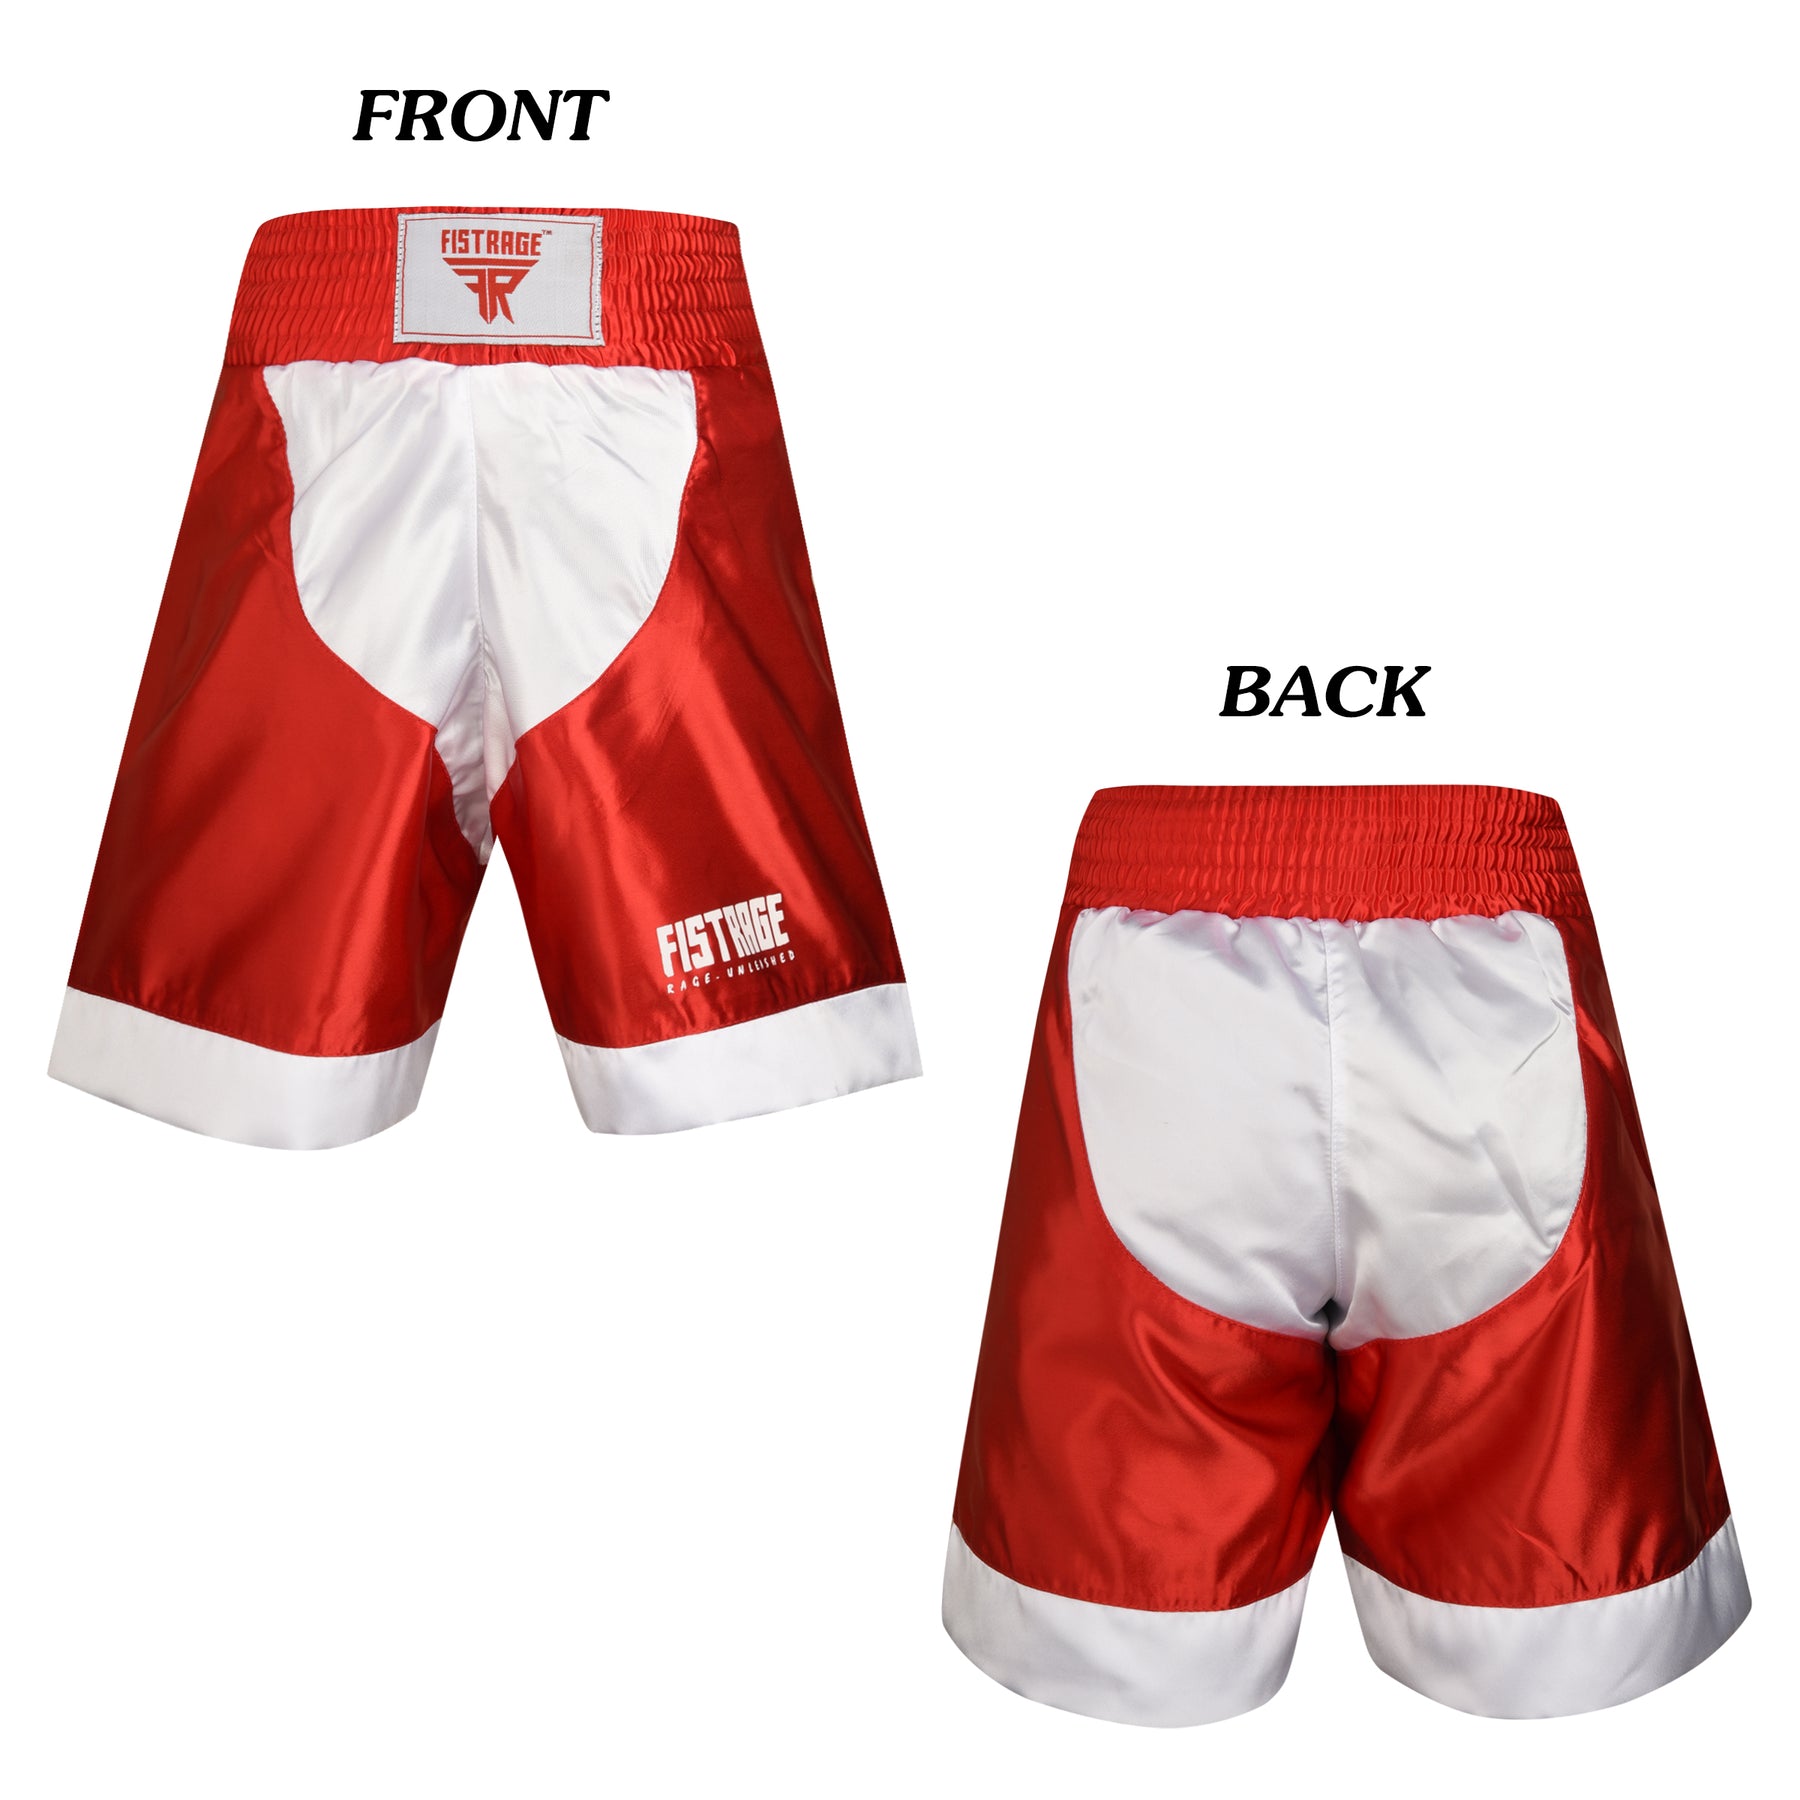 Kids Boxing Uniform Set 2PCS Top & Shorts - Red White